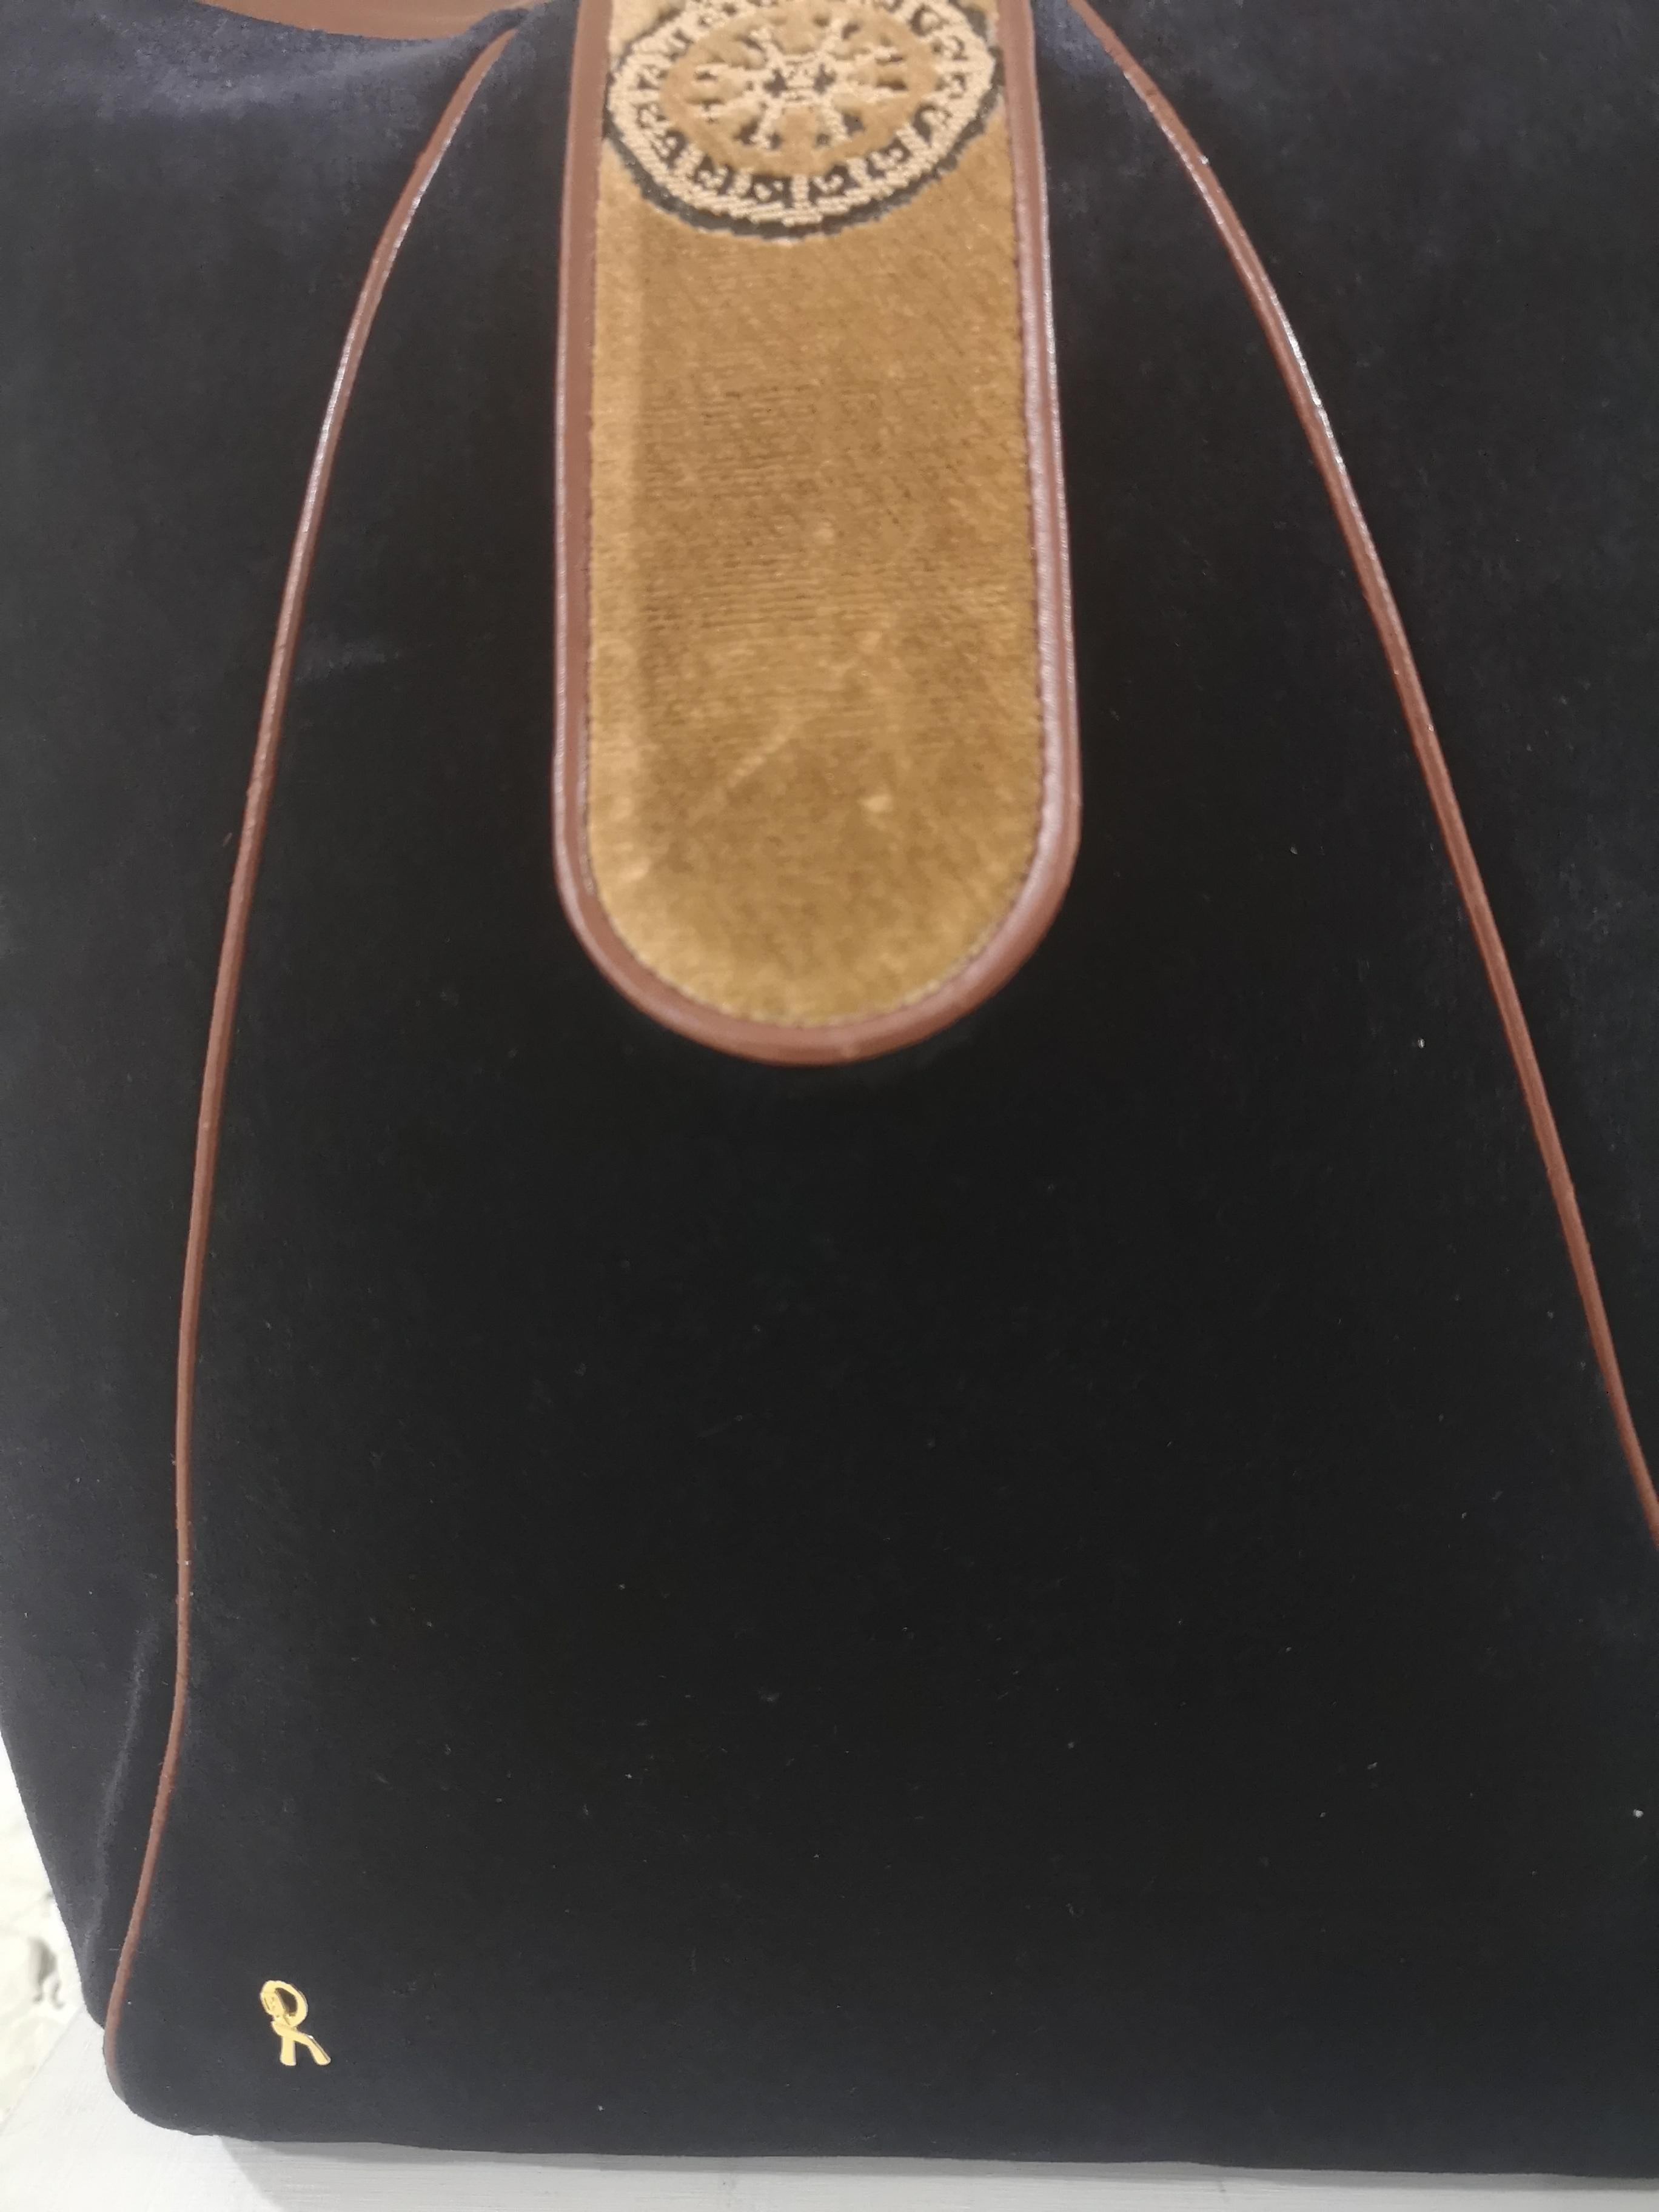 Roberta di Camerino blue velvet brown leather shoulder bag
Measurements: 40 * 31 cm , 14 cm depth